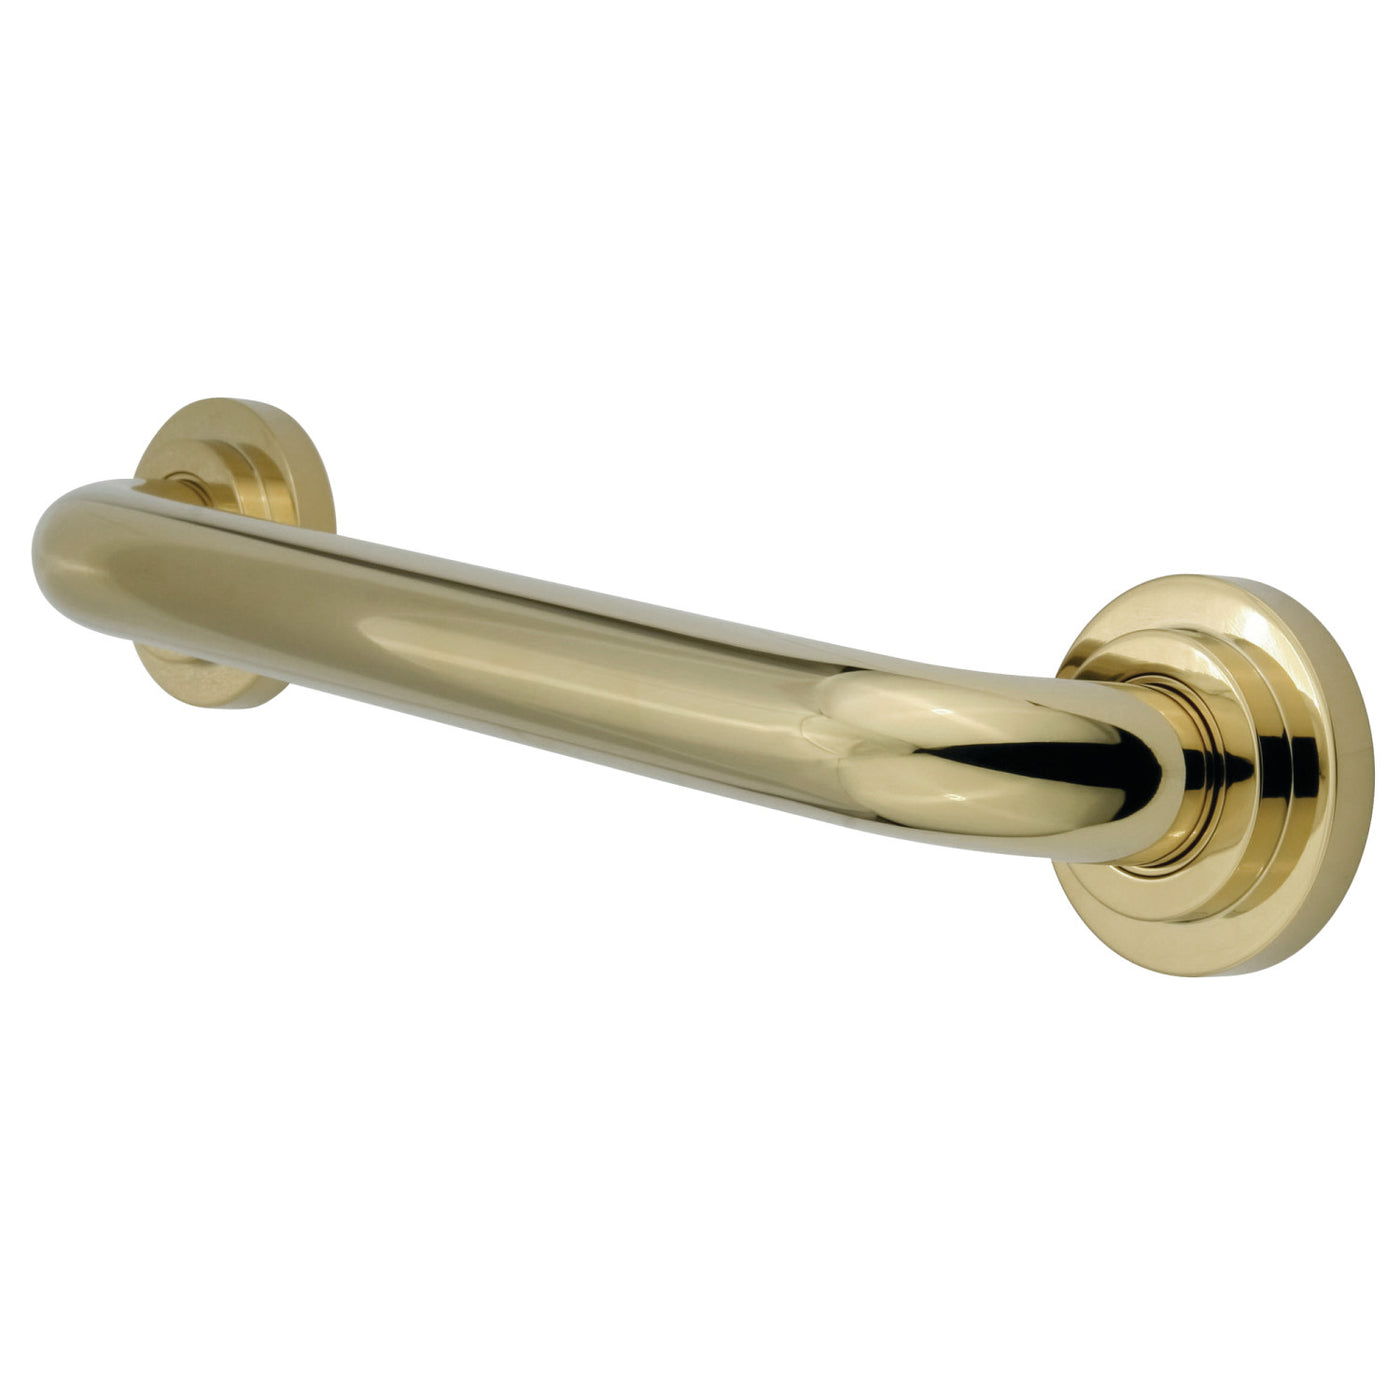 Elements of Design EDR414362 36-Inch X 1-1/4-Inch OD Grab Bar, Polished Brass